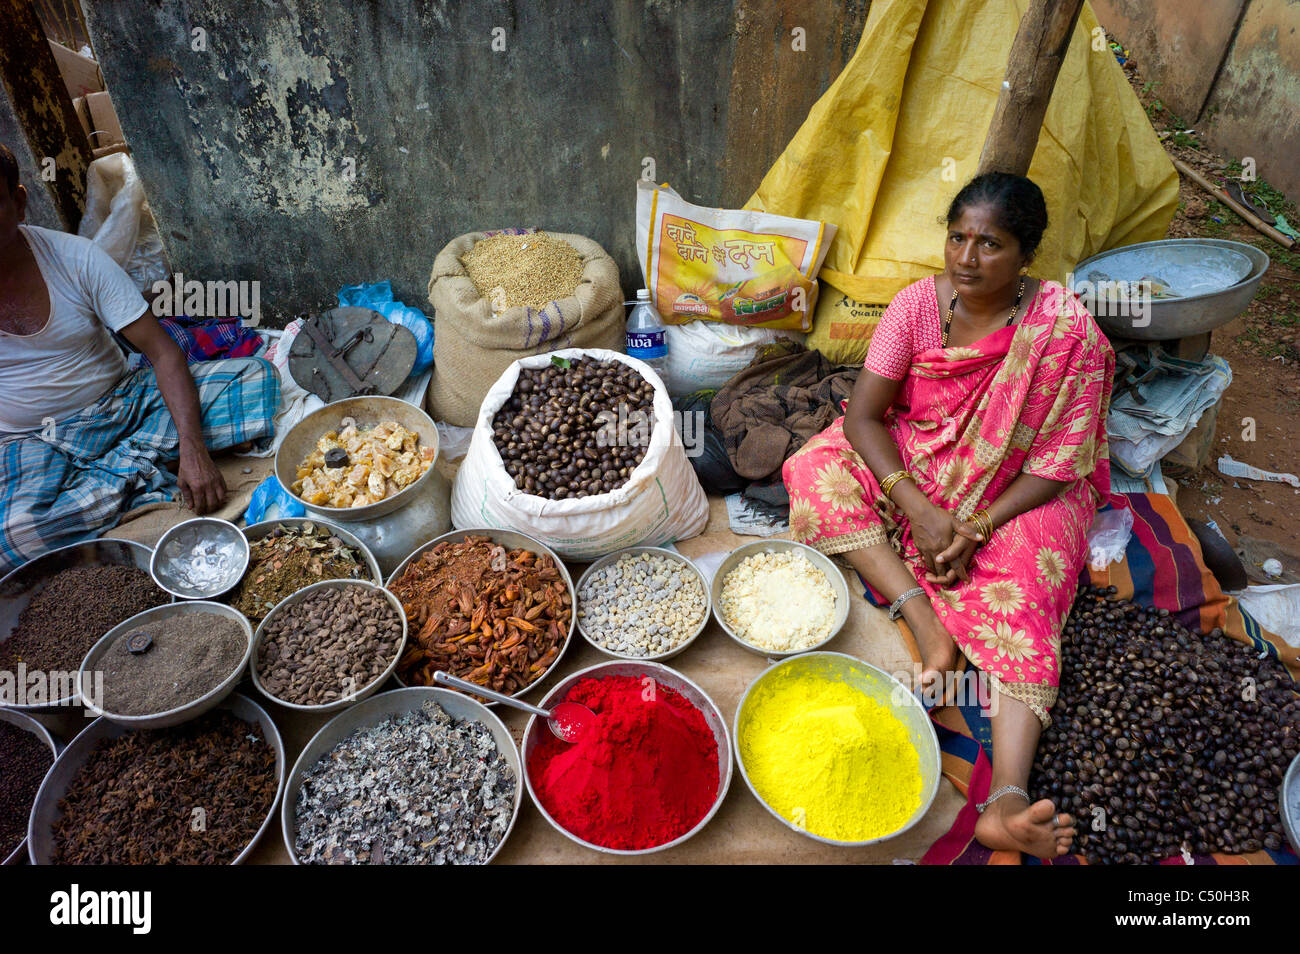 Selling Kumkum cosmetic powder at the market of Gokarna, during the Shivaratri religious festival Stock Photo